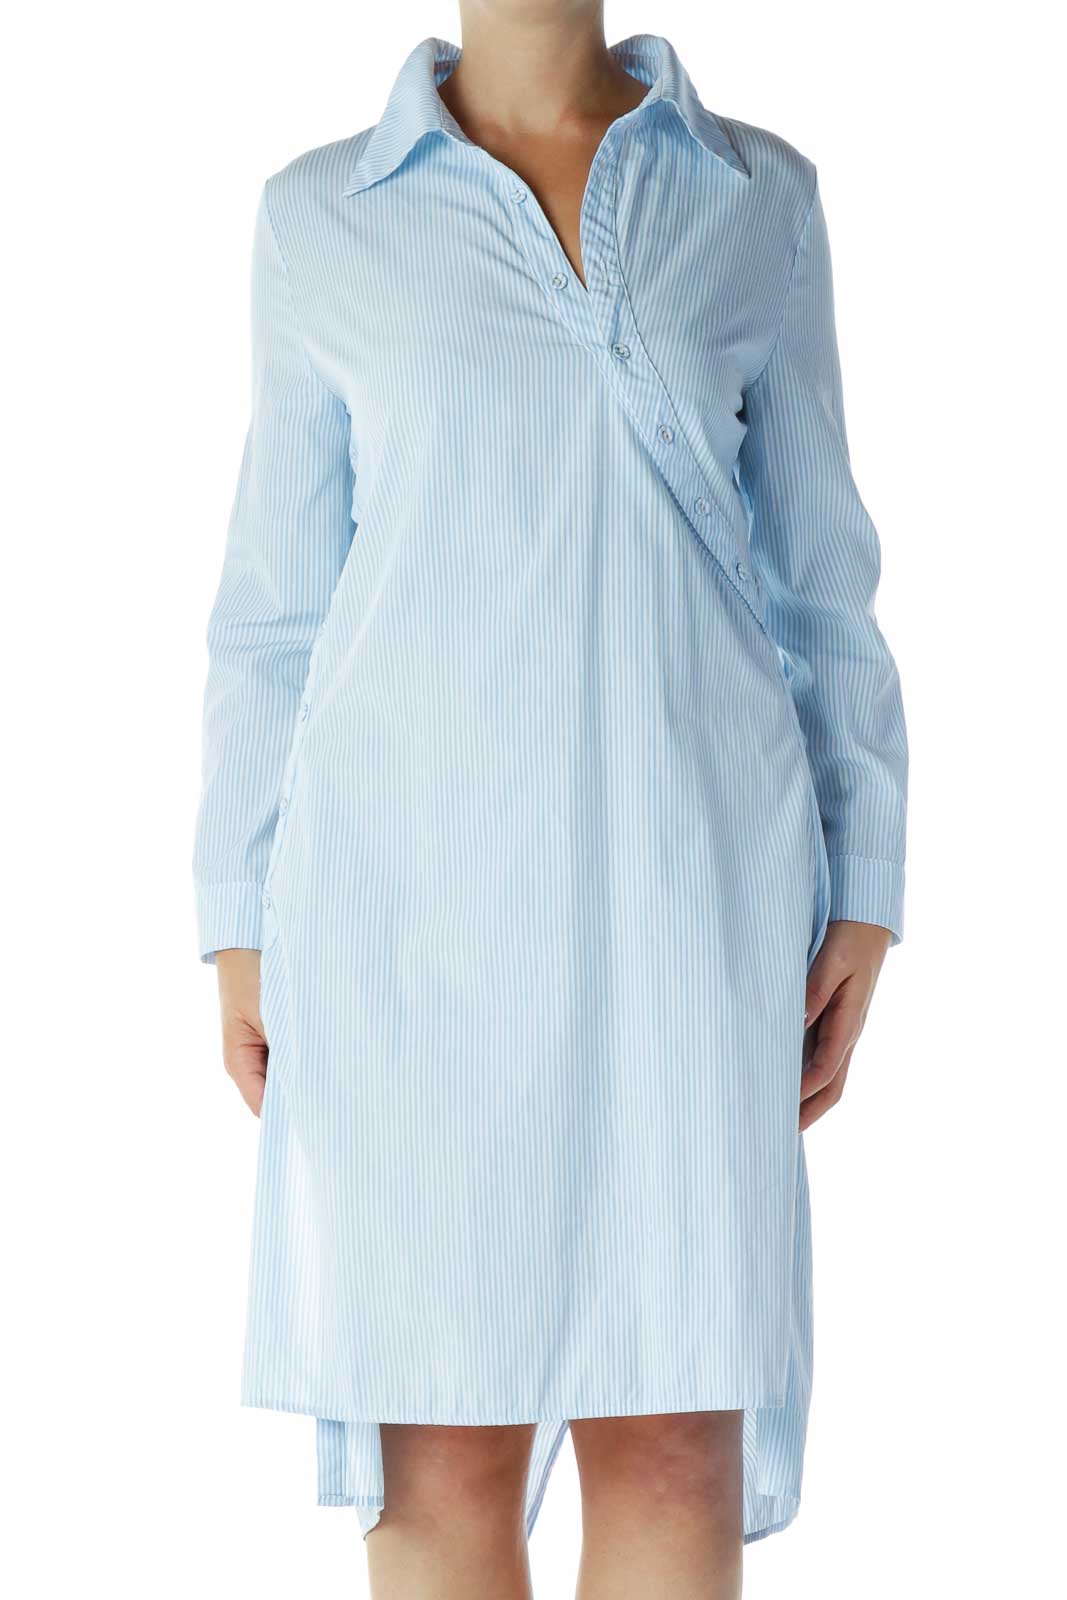 Blue & White Pinstripe Shirt Dress Front